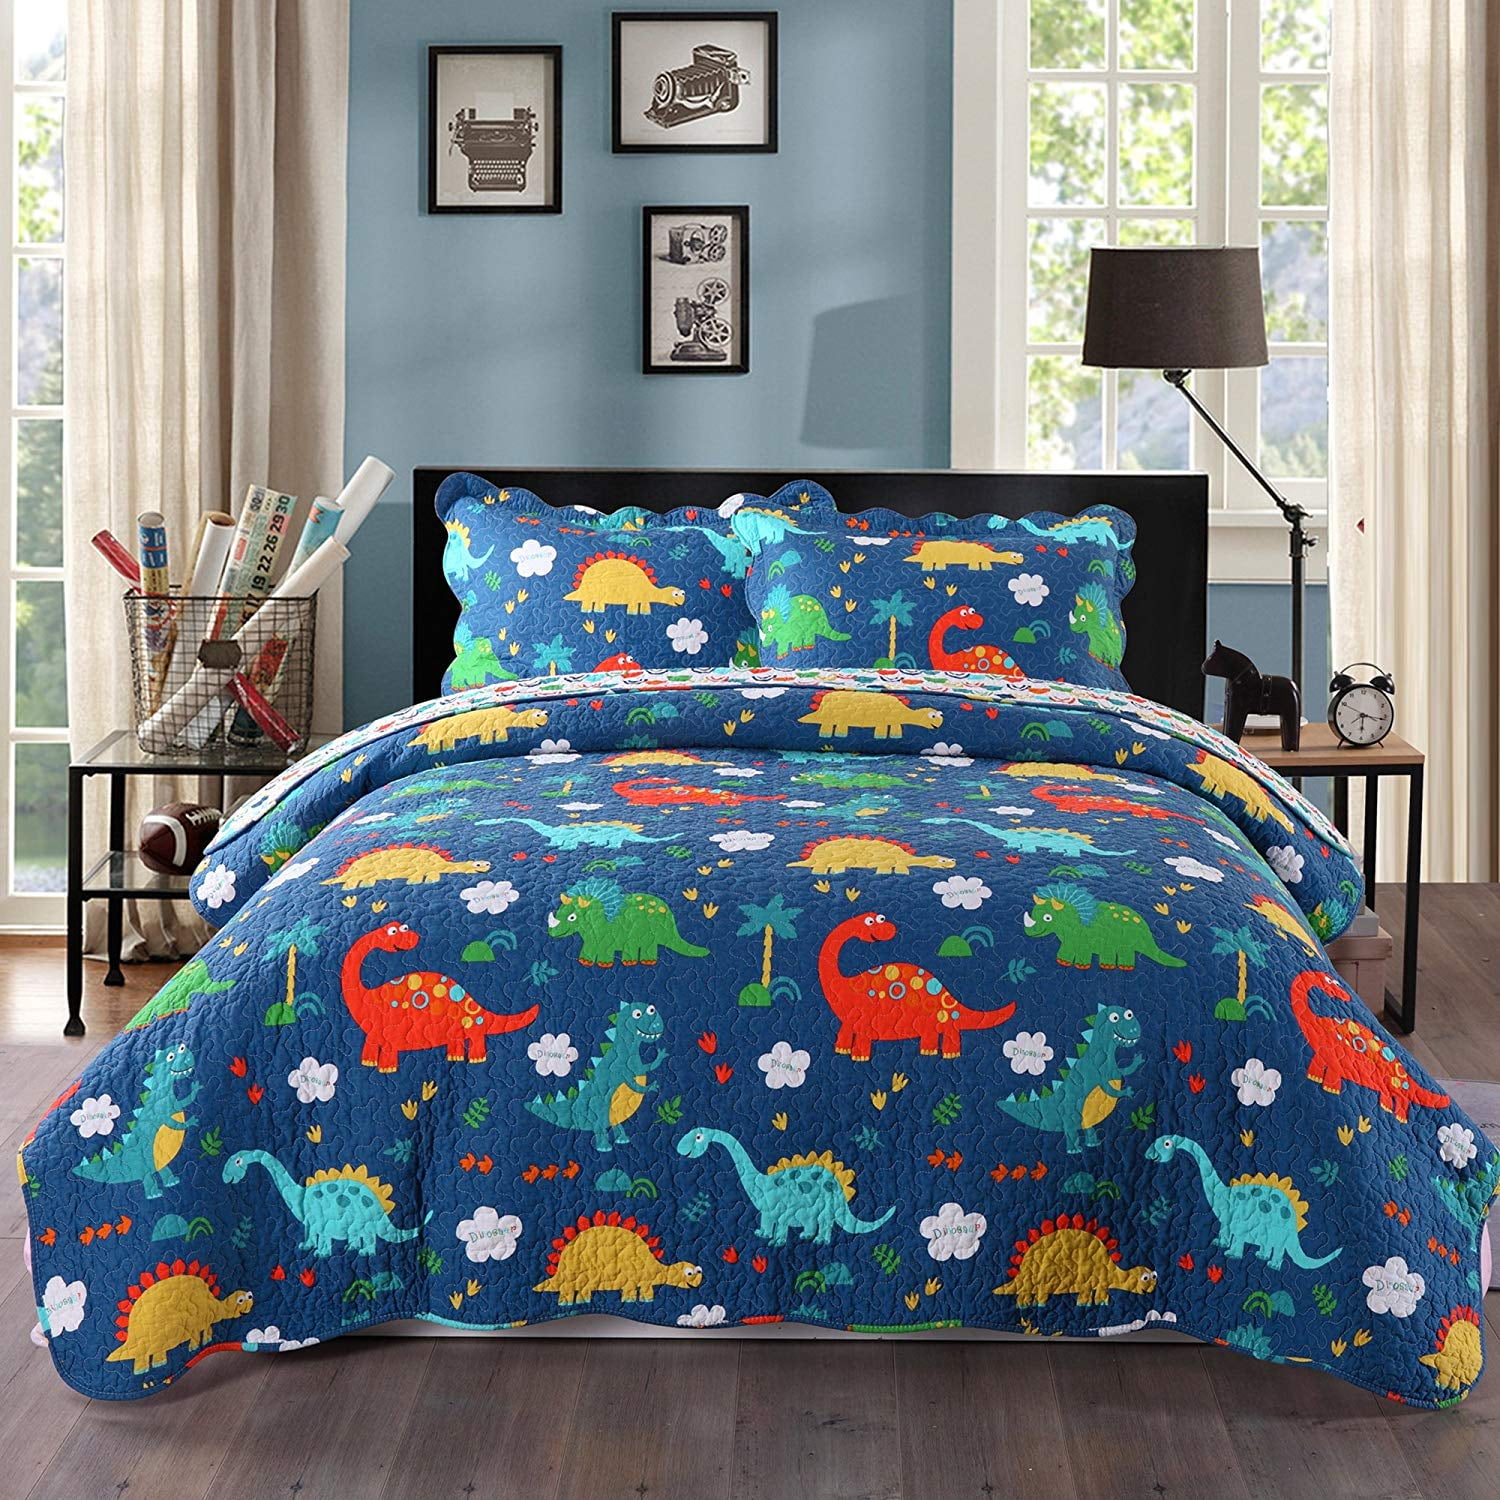 2/3pcs Kids Quilt Bedspread Comforter Set Throw Blanket for Quilt A73 Bird 